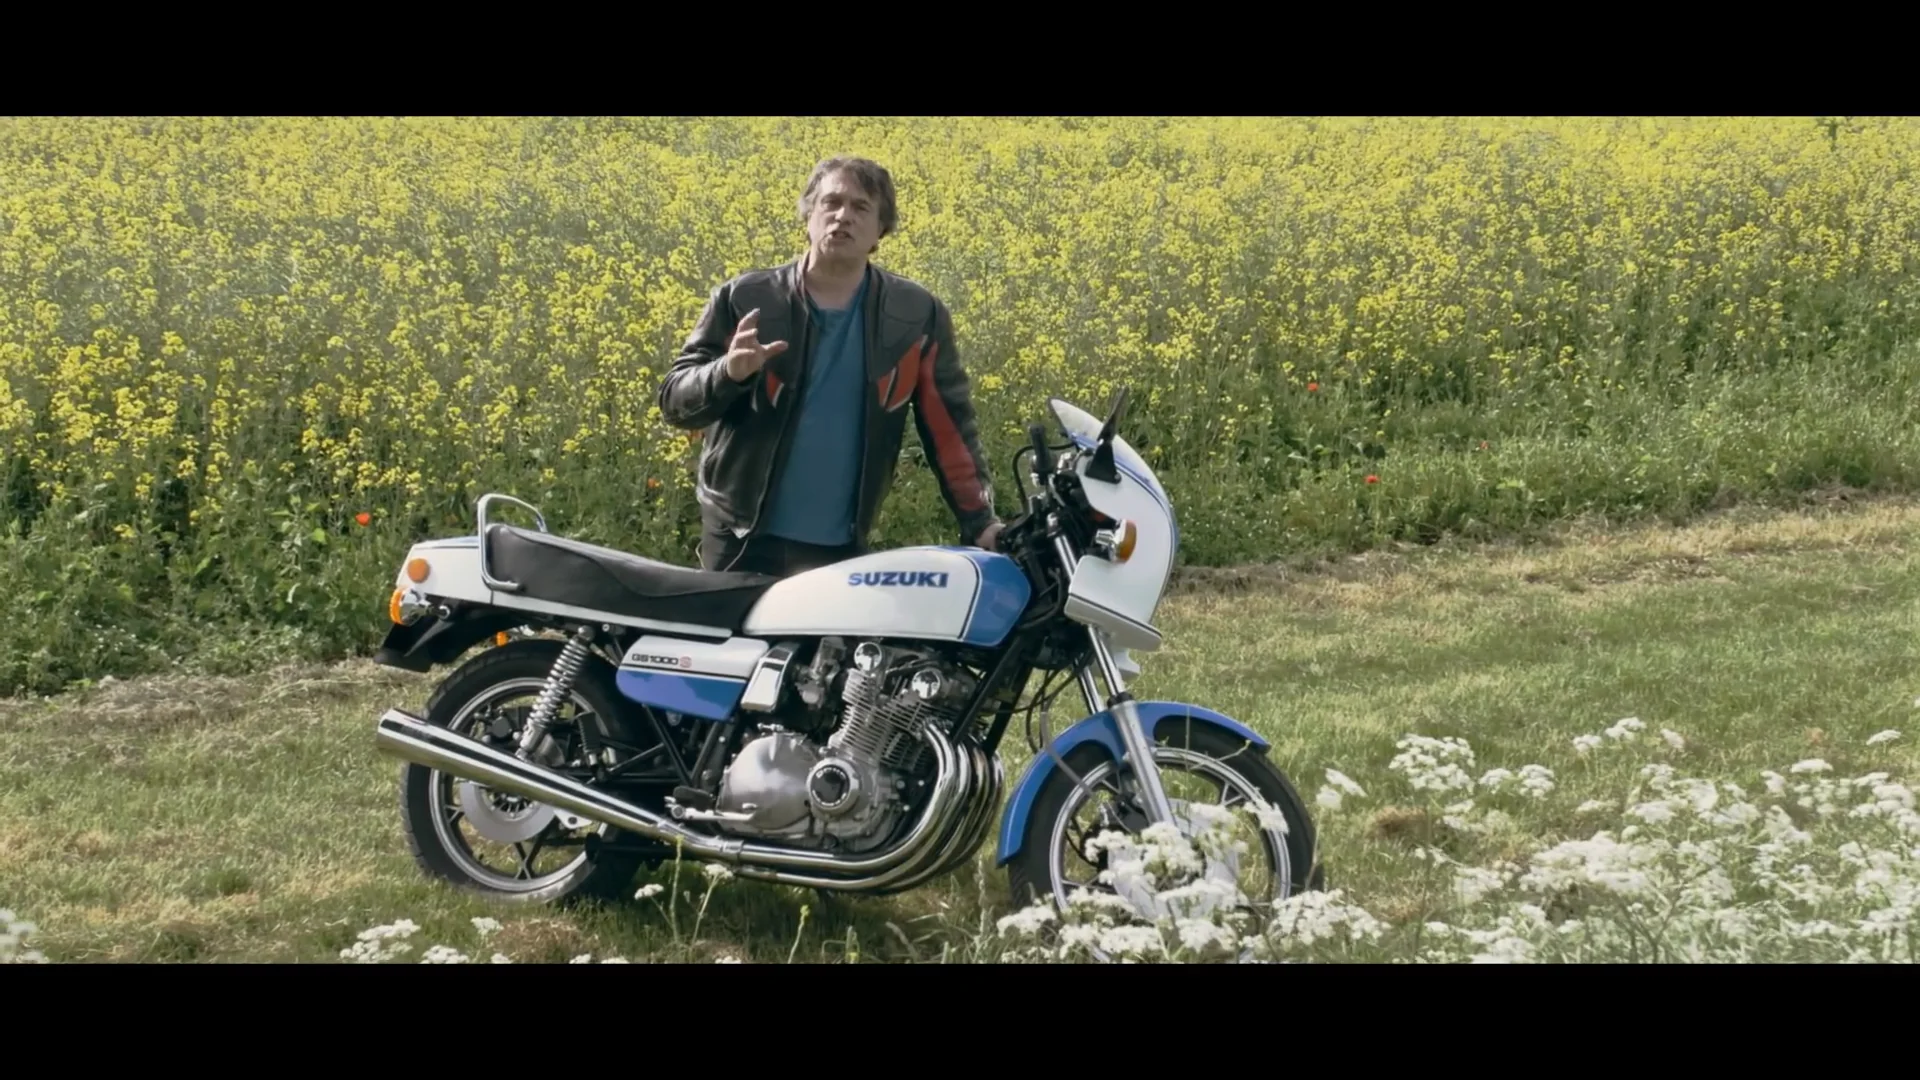 Honda CBX 1000 _ Classic Bike Investment with Paul Jayson on Vimeo